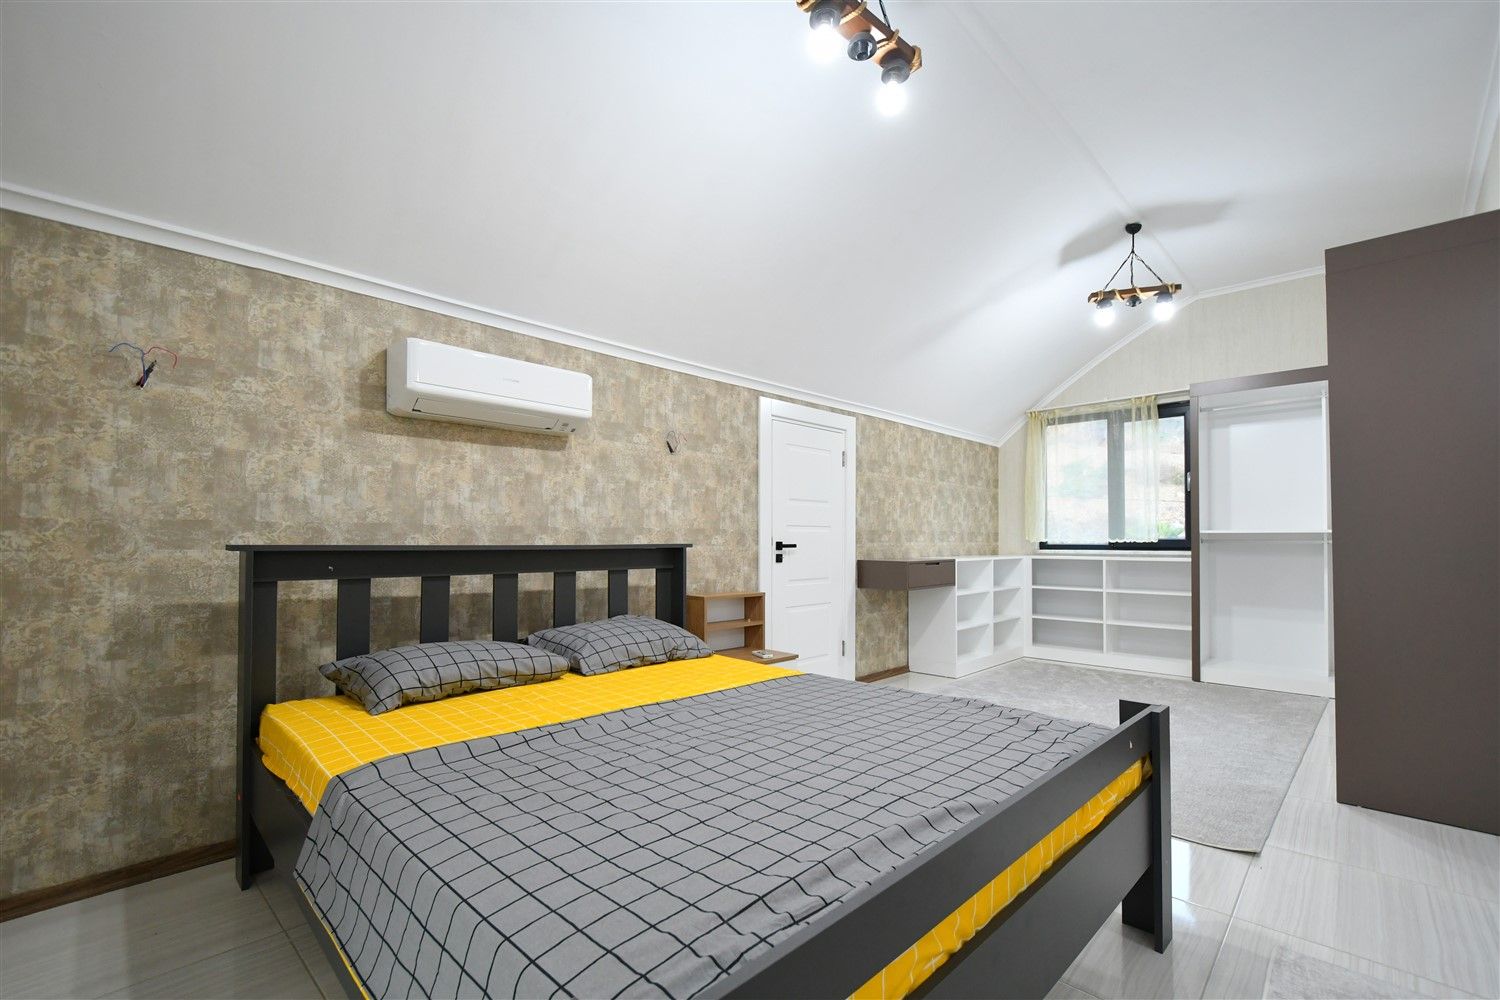 Four bedrooms villa in Kargicak, suitable for citizenship